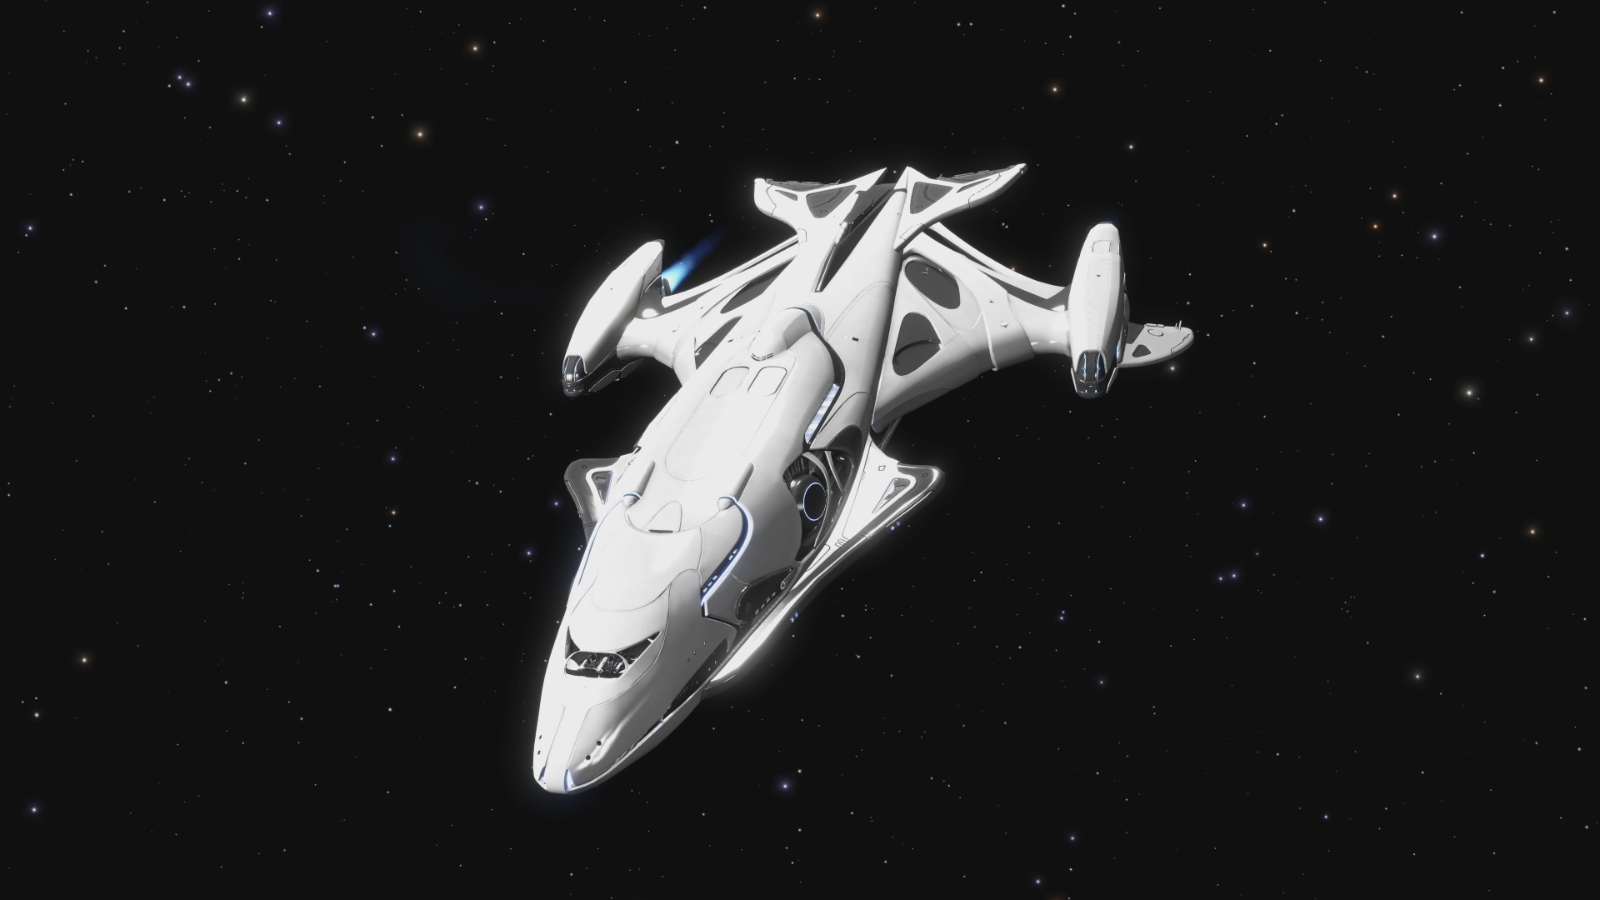 Imperial Cutter Spaceship Elite Dangerous Wallpapers